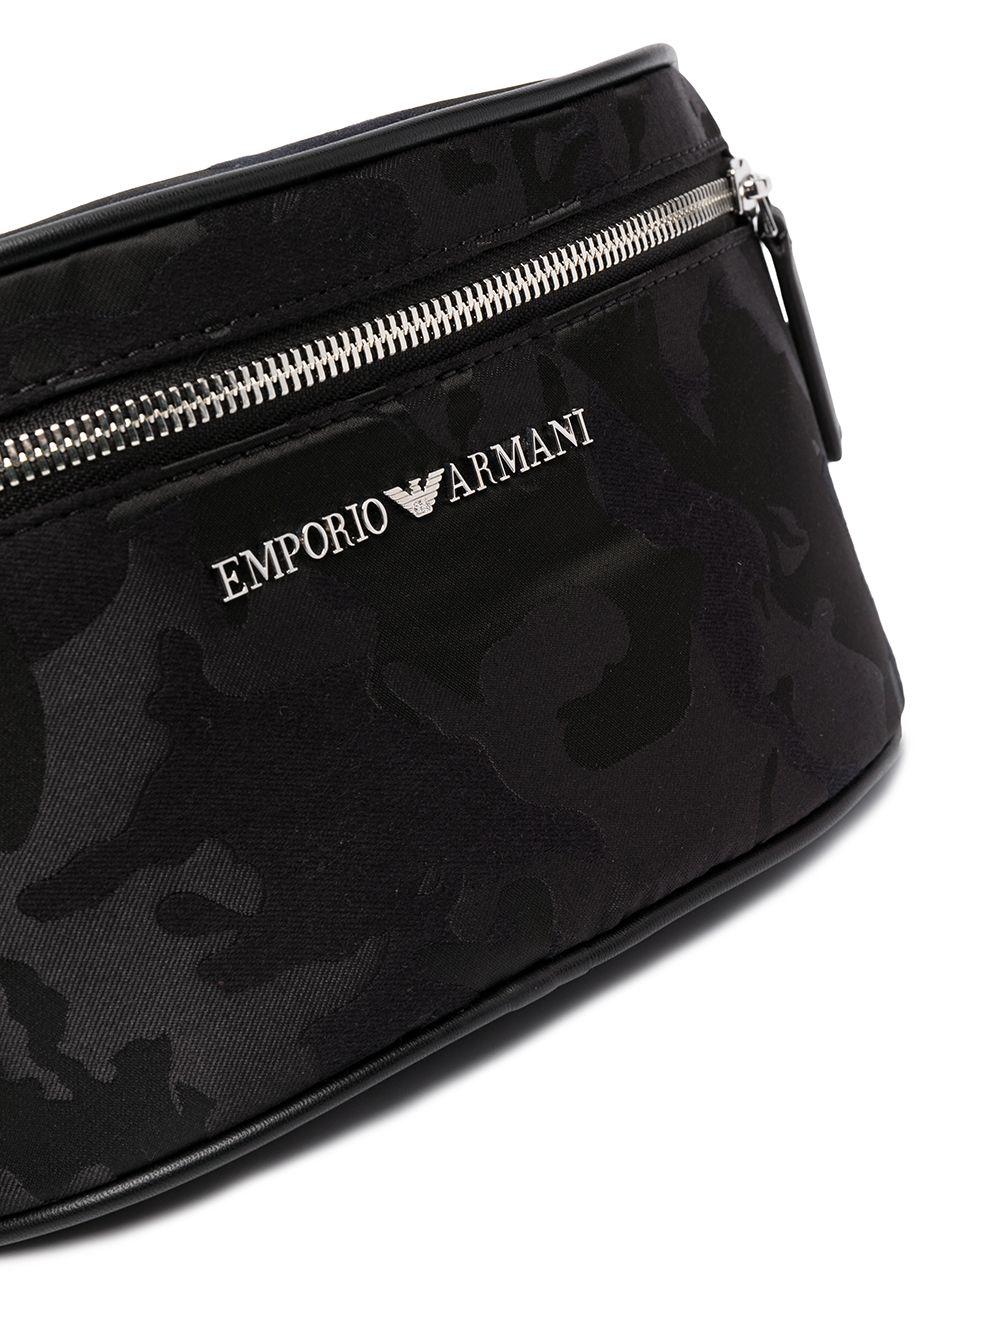 Emporio Armani Logo Zipped Belt Bag in Black for Men - Lyst